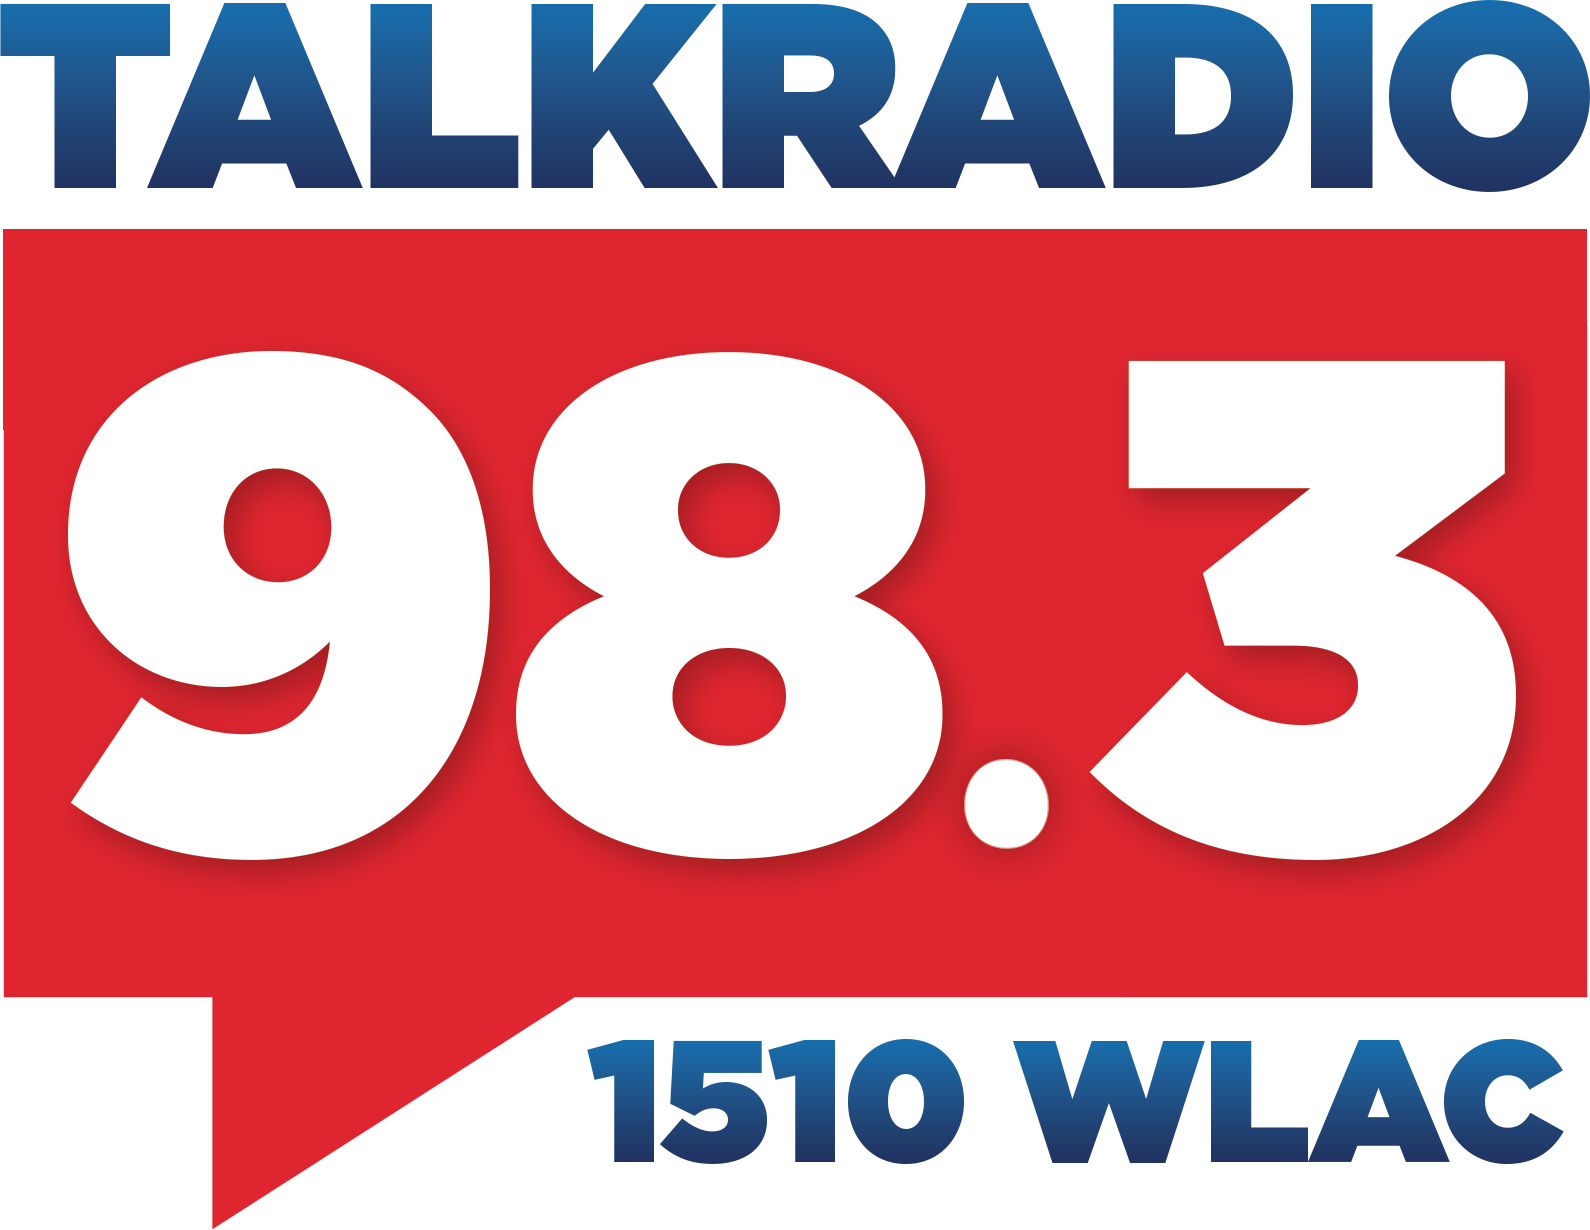 WLAC - Where Nashville Comes For Talk